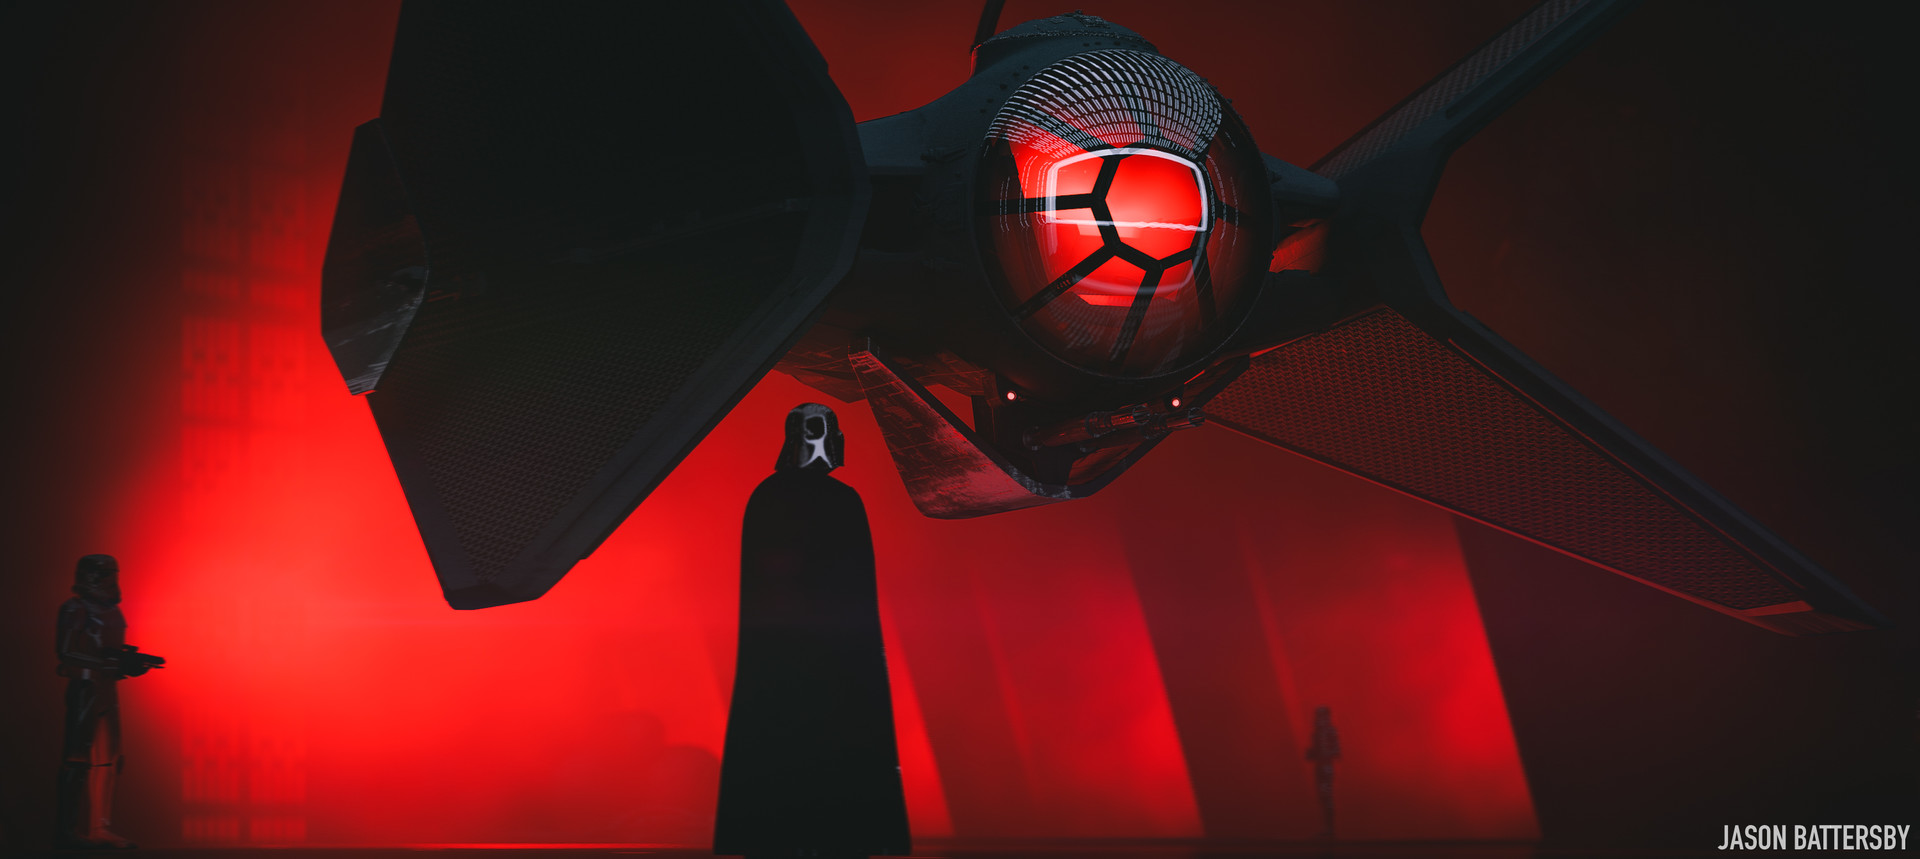 Star Wars Darth Vader Red Tie